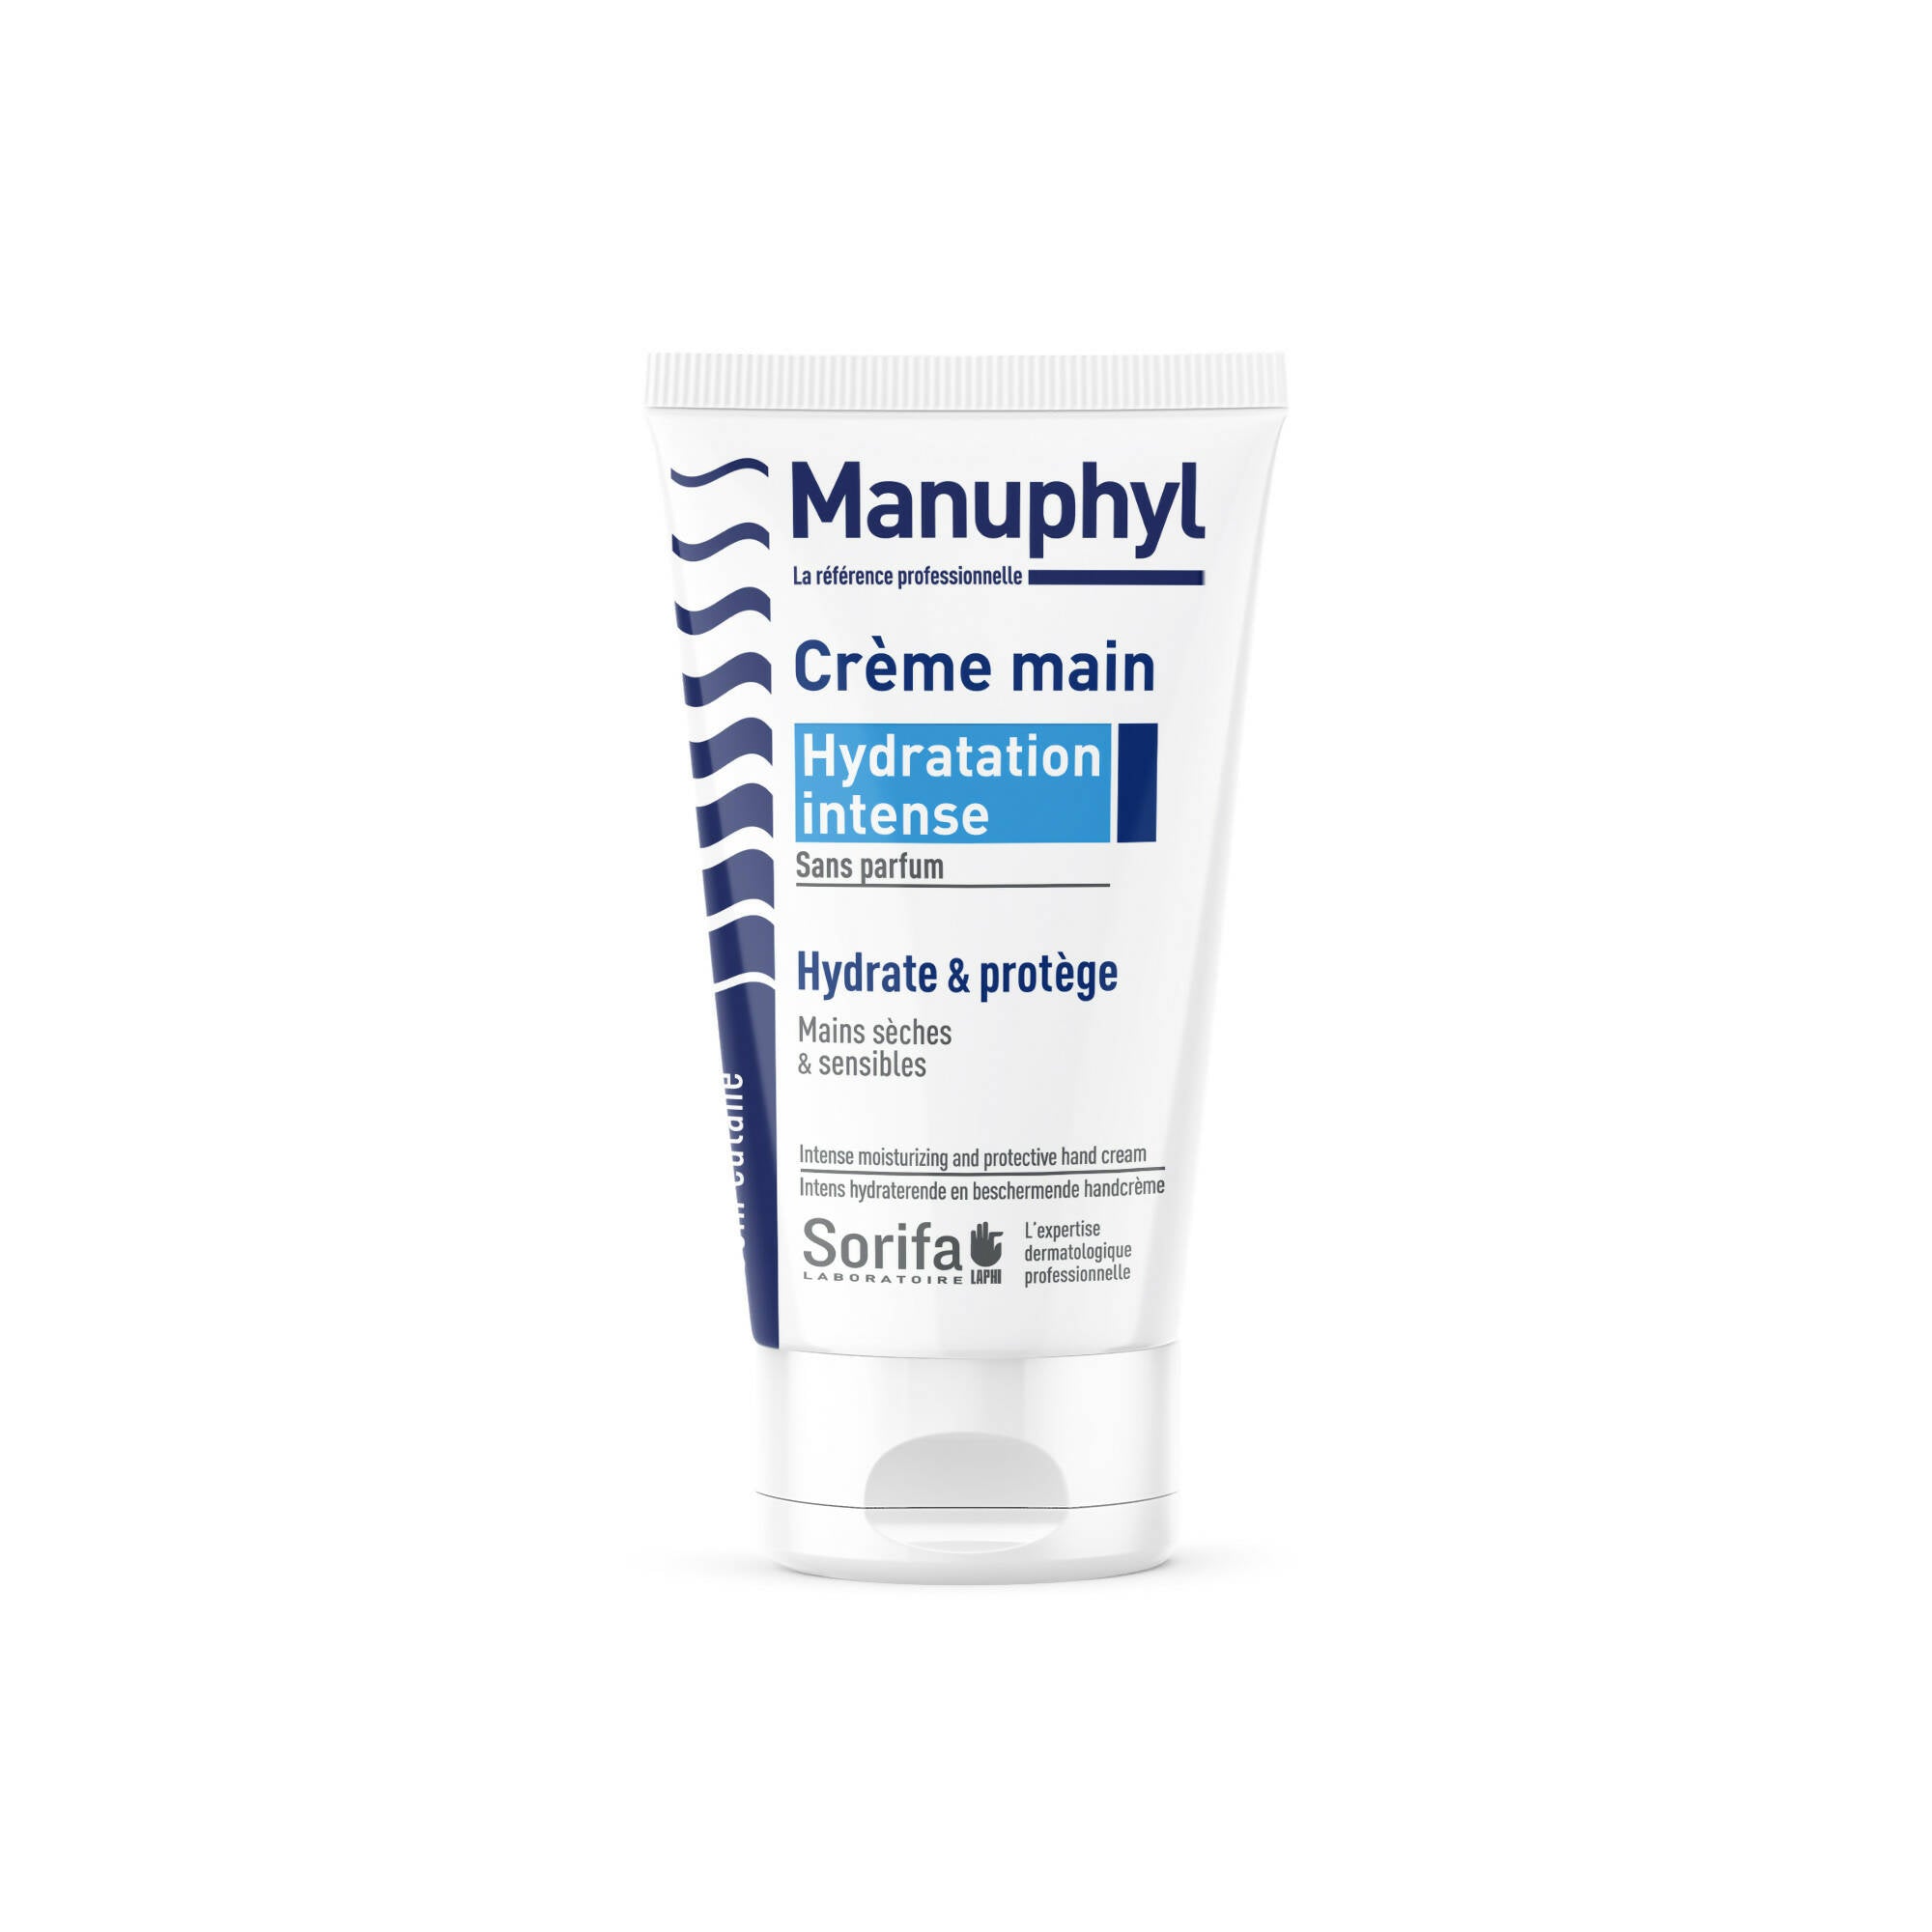 MAN050 - Manuphyl Hydratation intense 50 ml recto